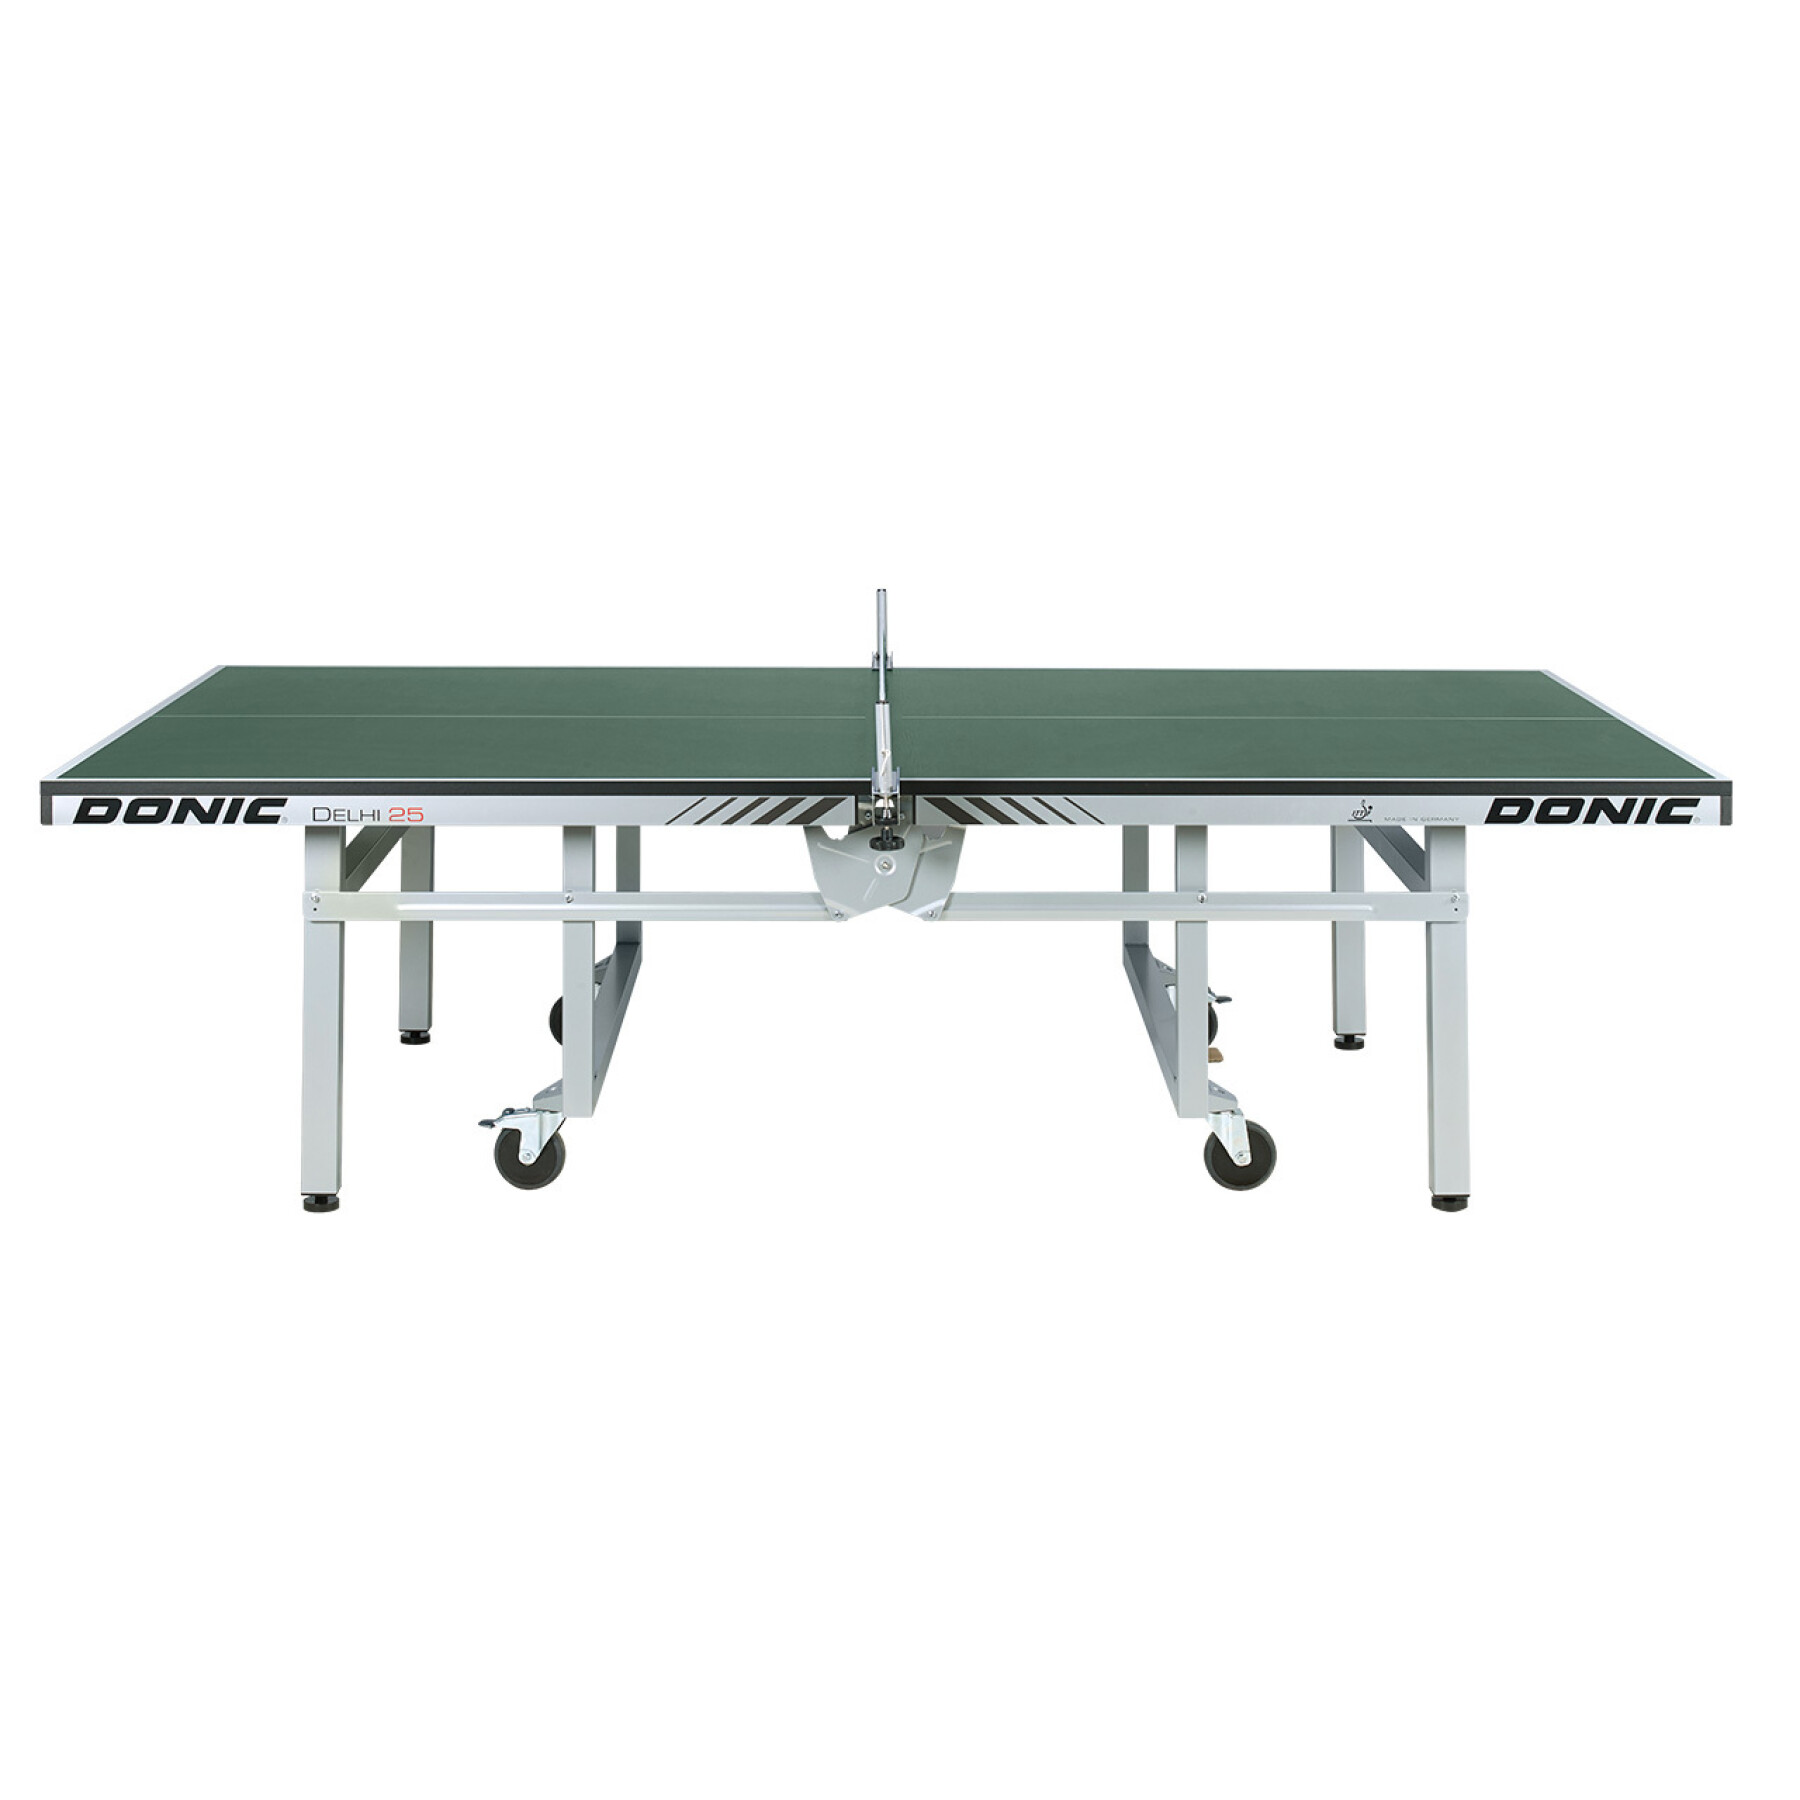 Fully assembled table tennis table Donic Delhi 25 ** ITTF